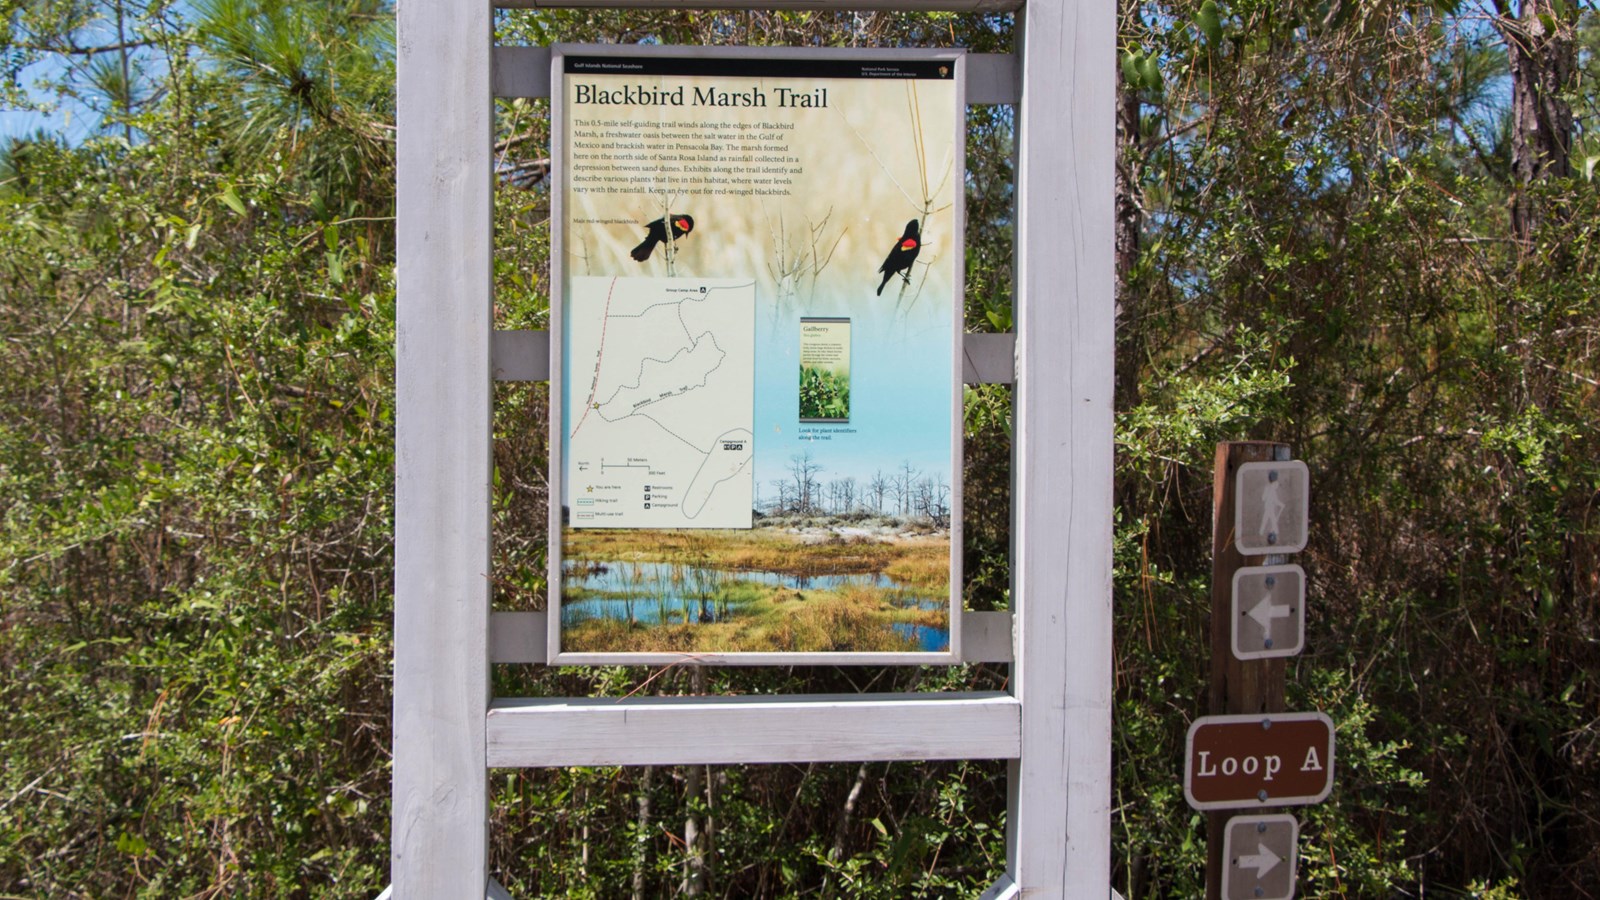 A sign marks the start of the Blackbird Marsh Trail